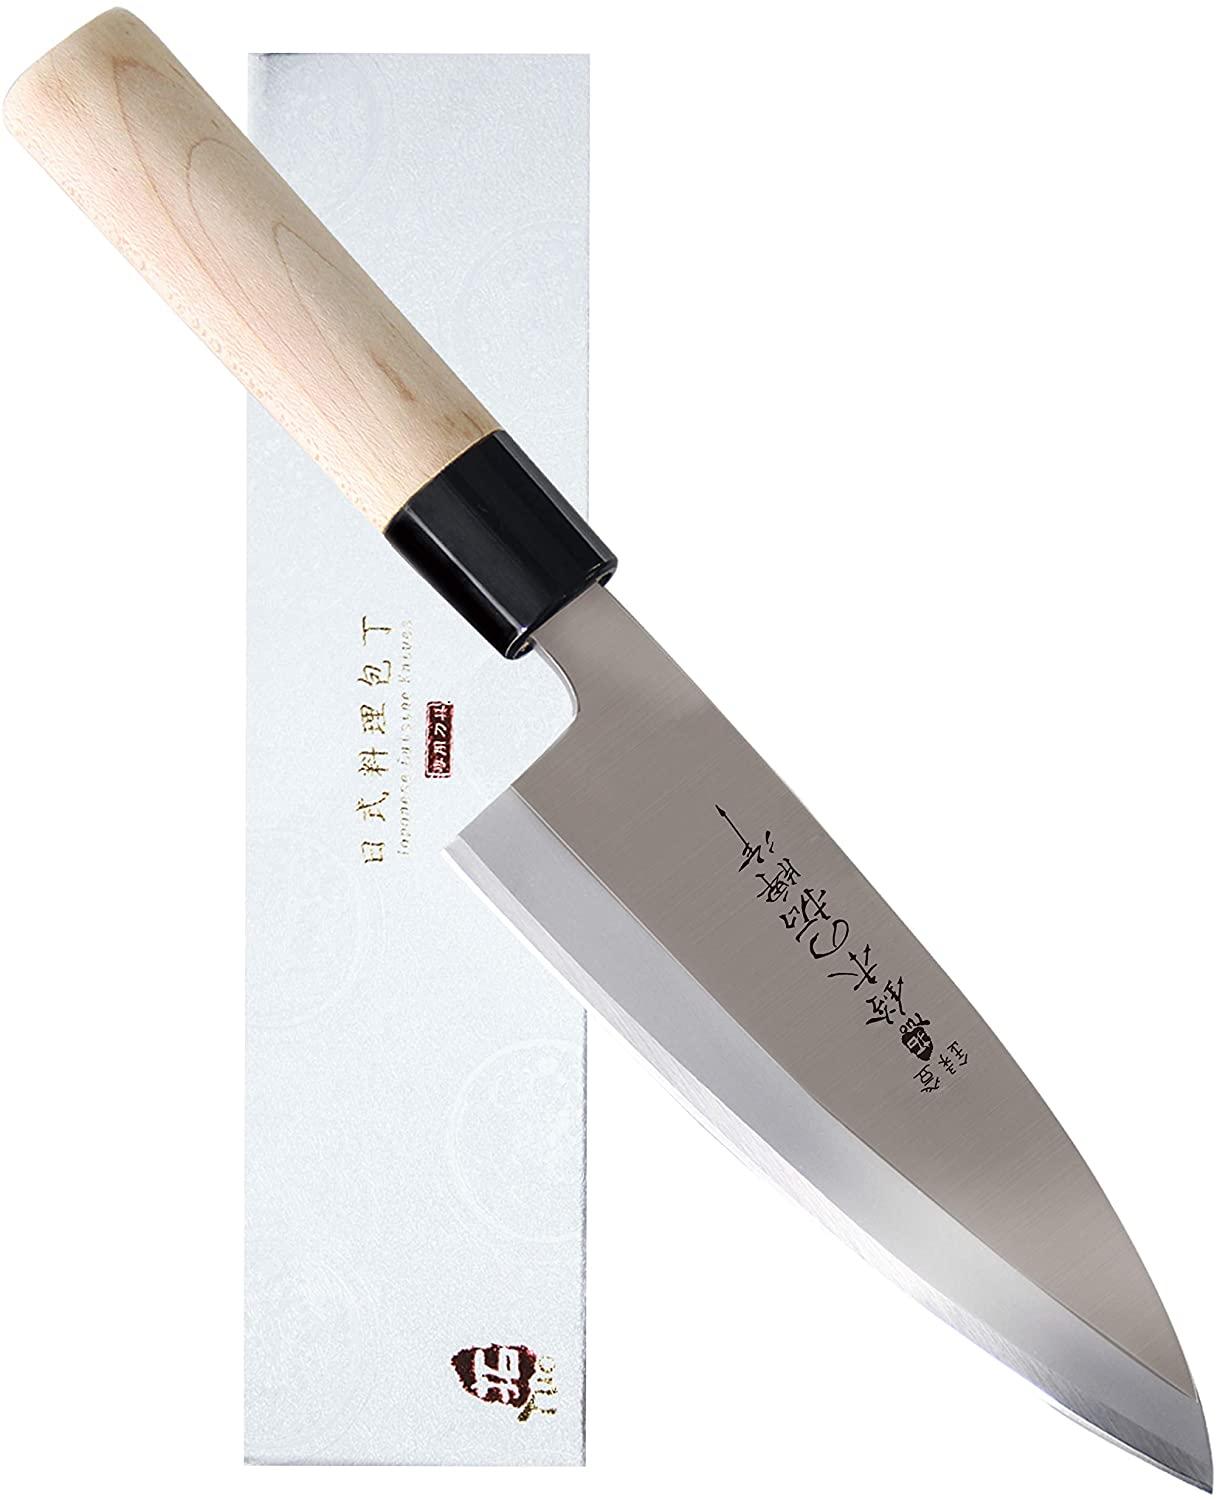 TUO BESTEK Deba mes-Japanse HC Rvs Sashimi Sushi Keukenmes-Non-slip Ergonomische Wit Handvat -6.5"